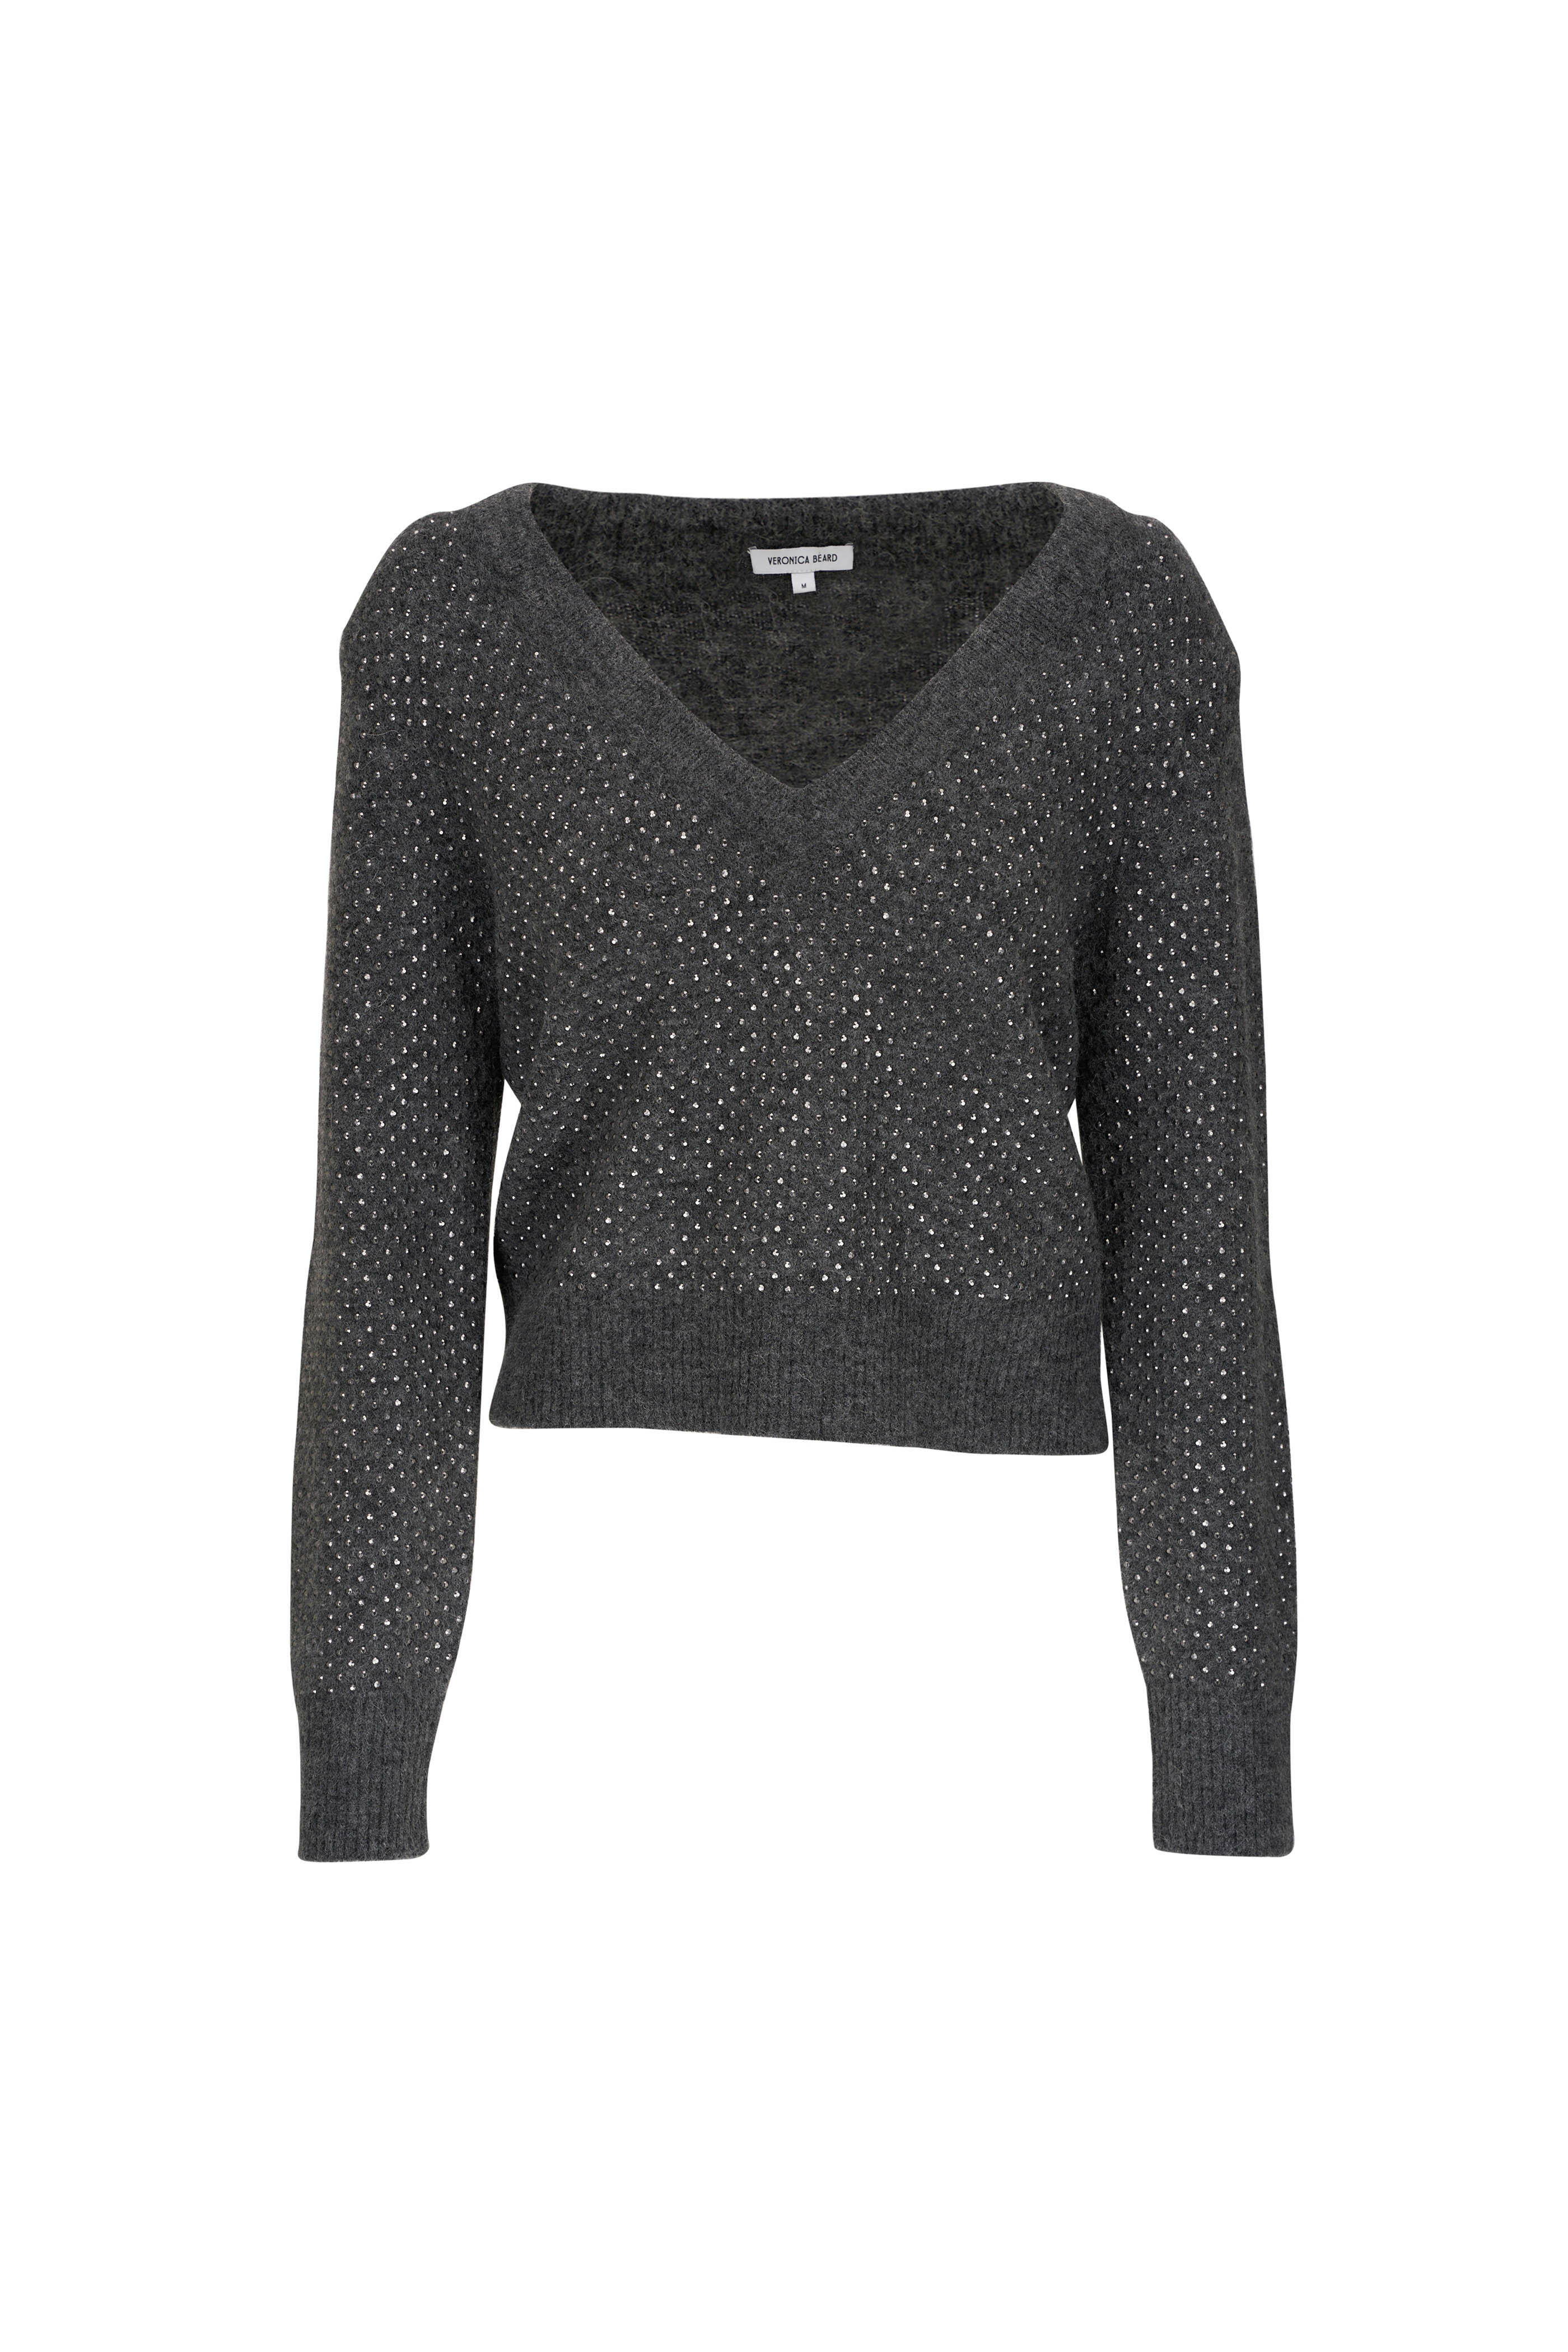 Veronica Beard - Pablah Charcoal Crystal Embellished Sweater